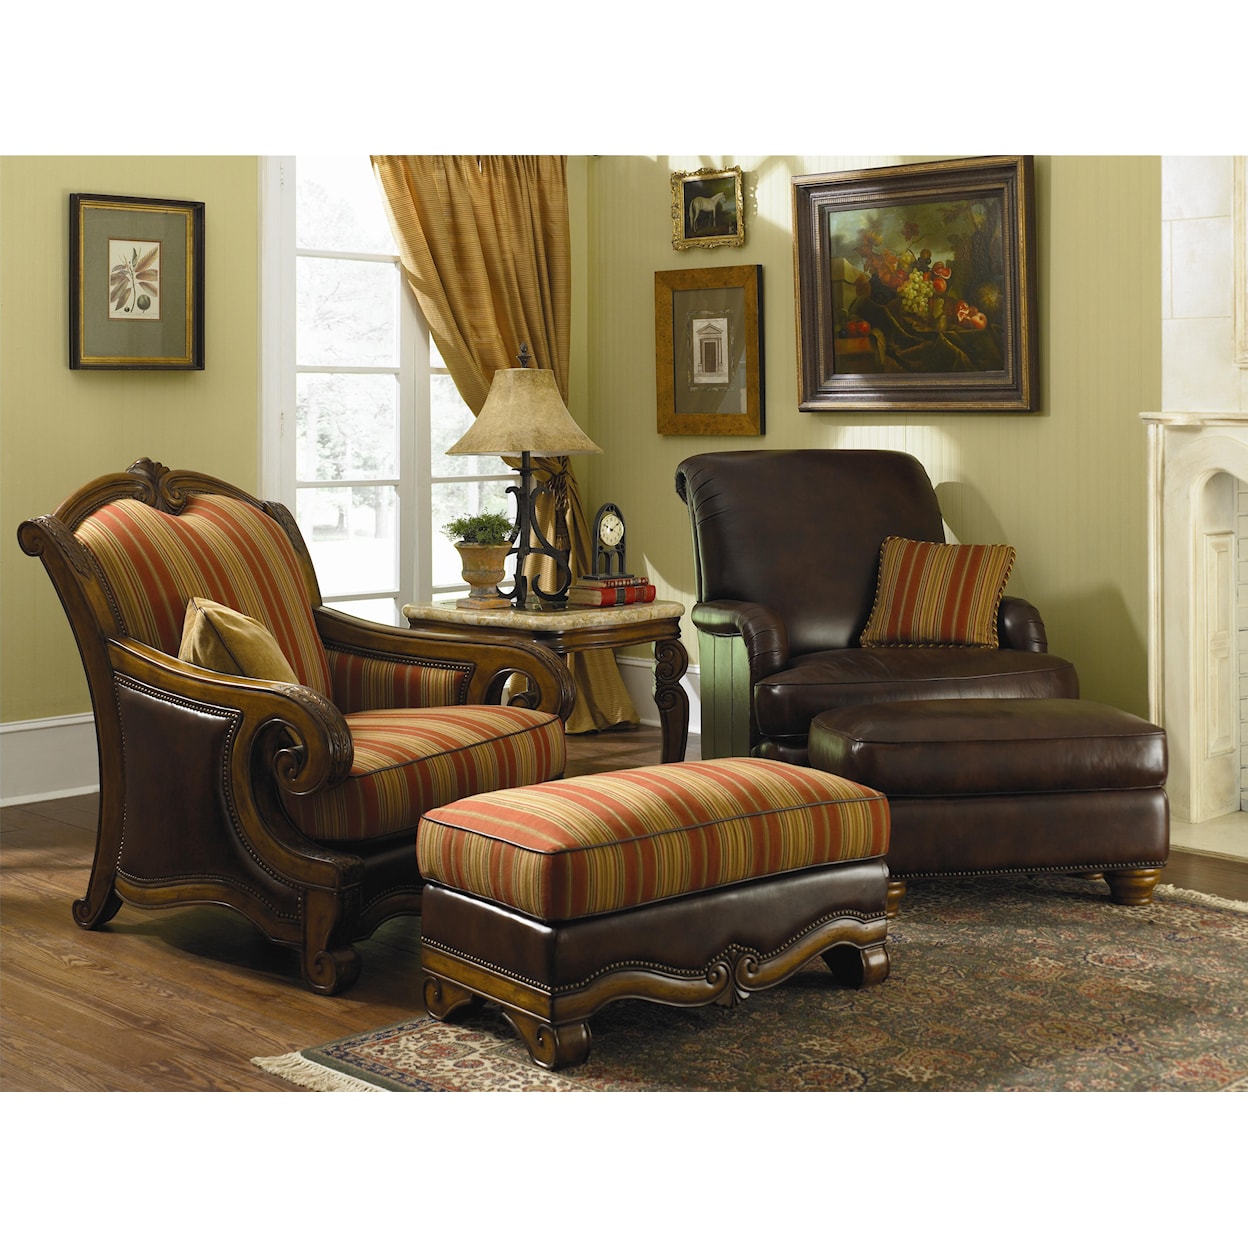 Michael Amini Tuscano Melange Wood Trim Leather/ Fabric Chair